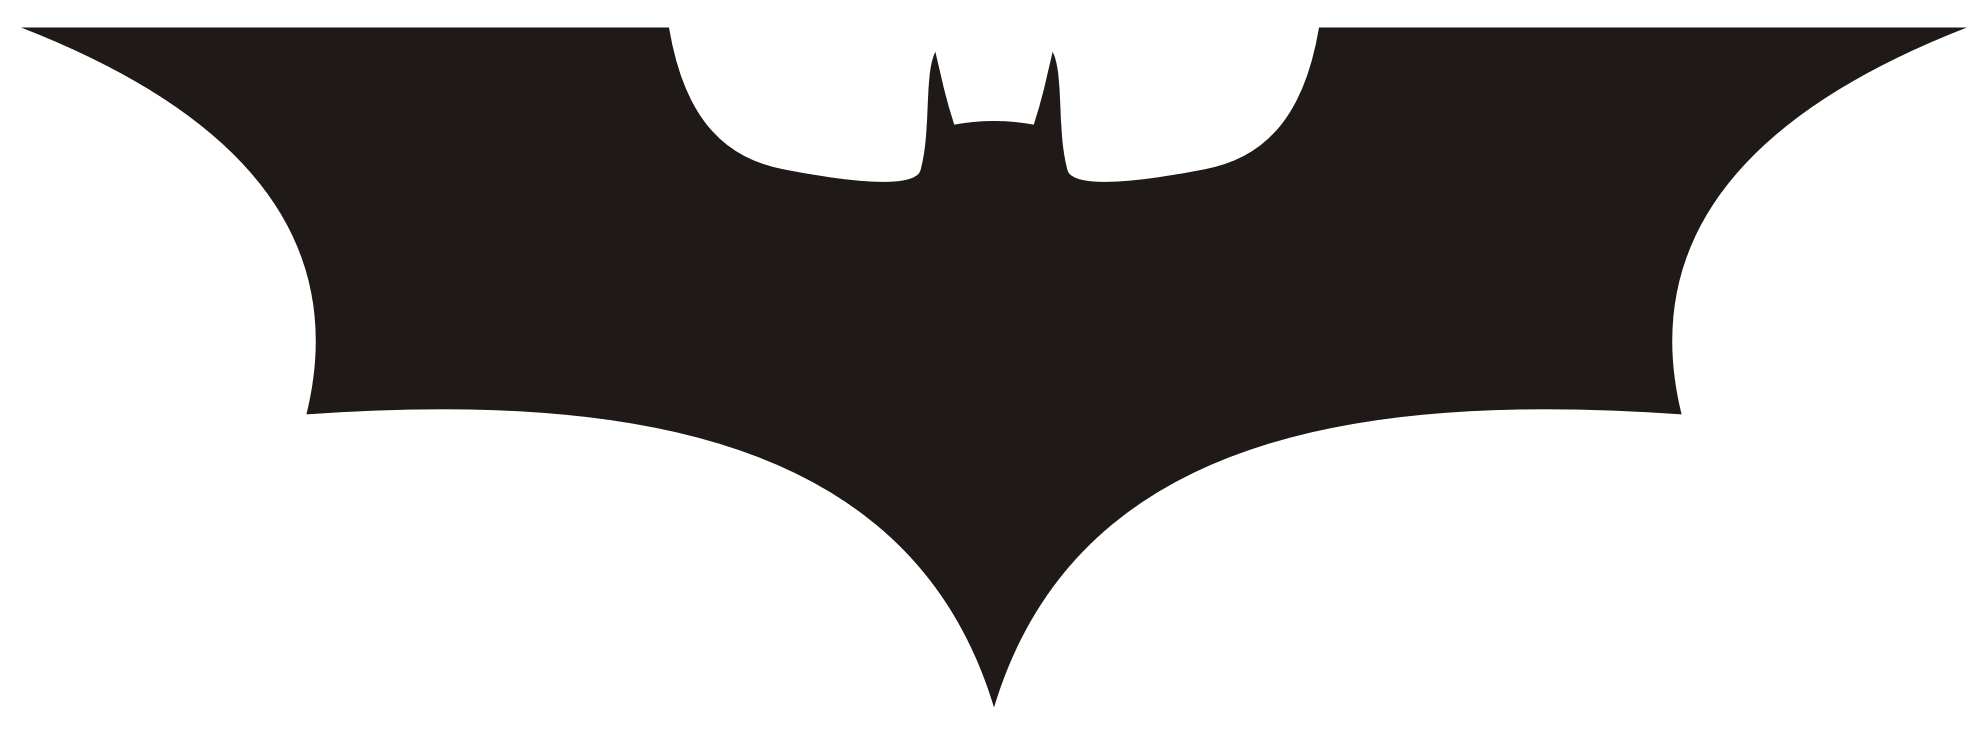 clip art batman logo - photo #37